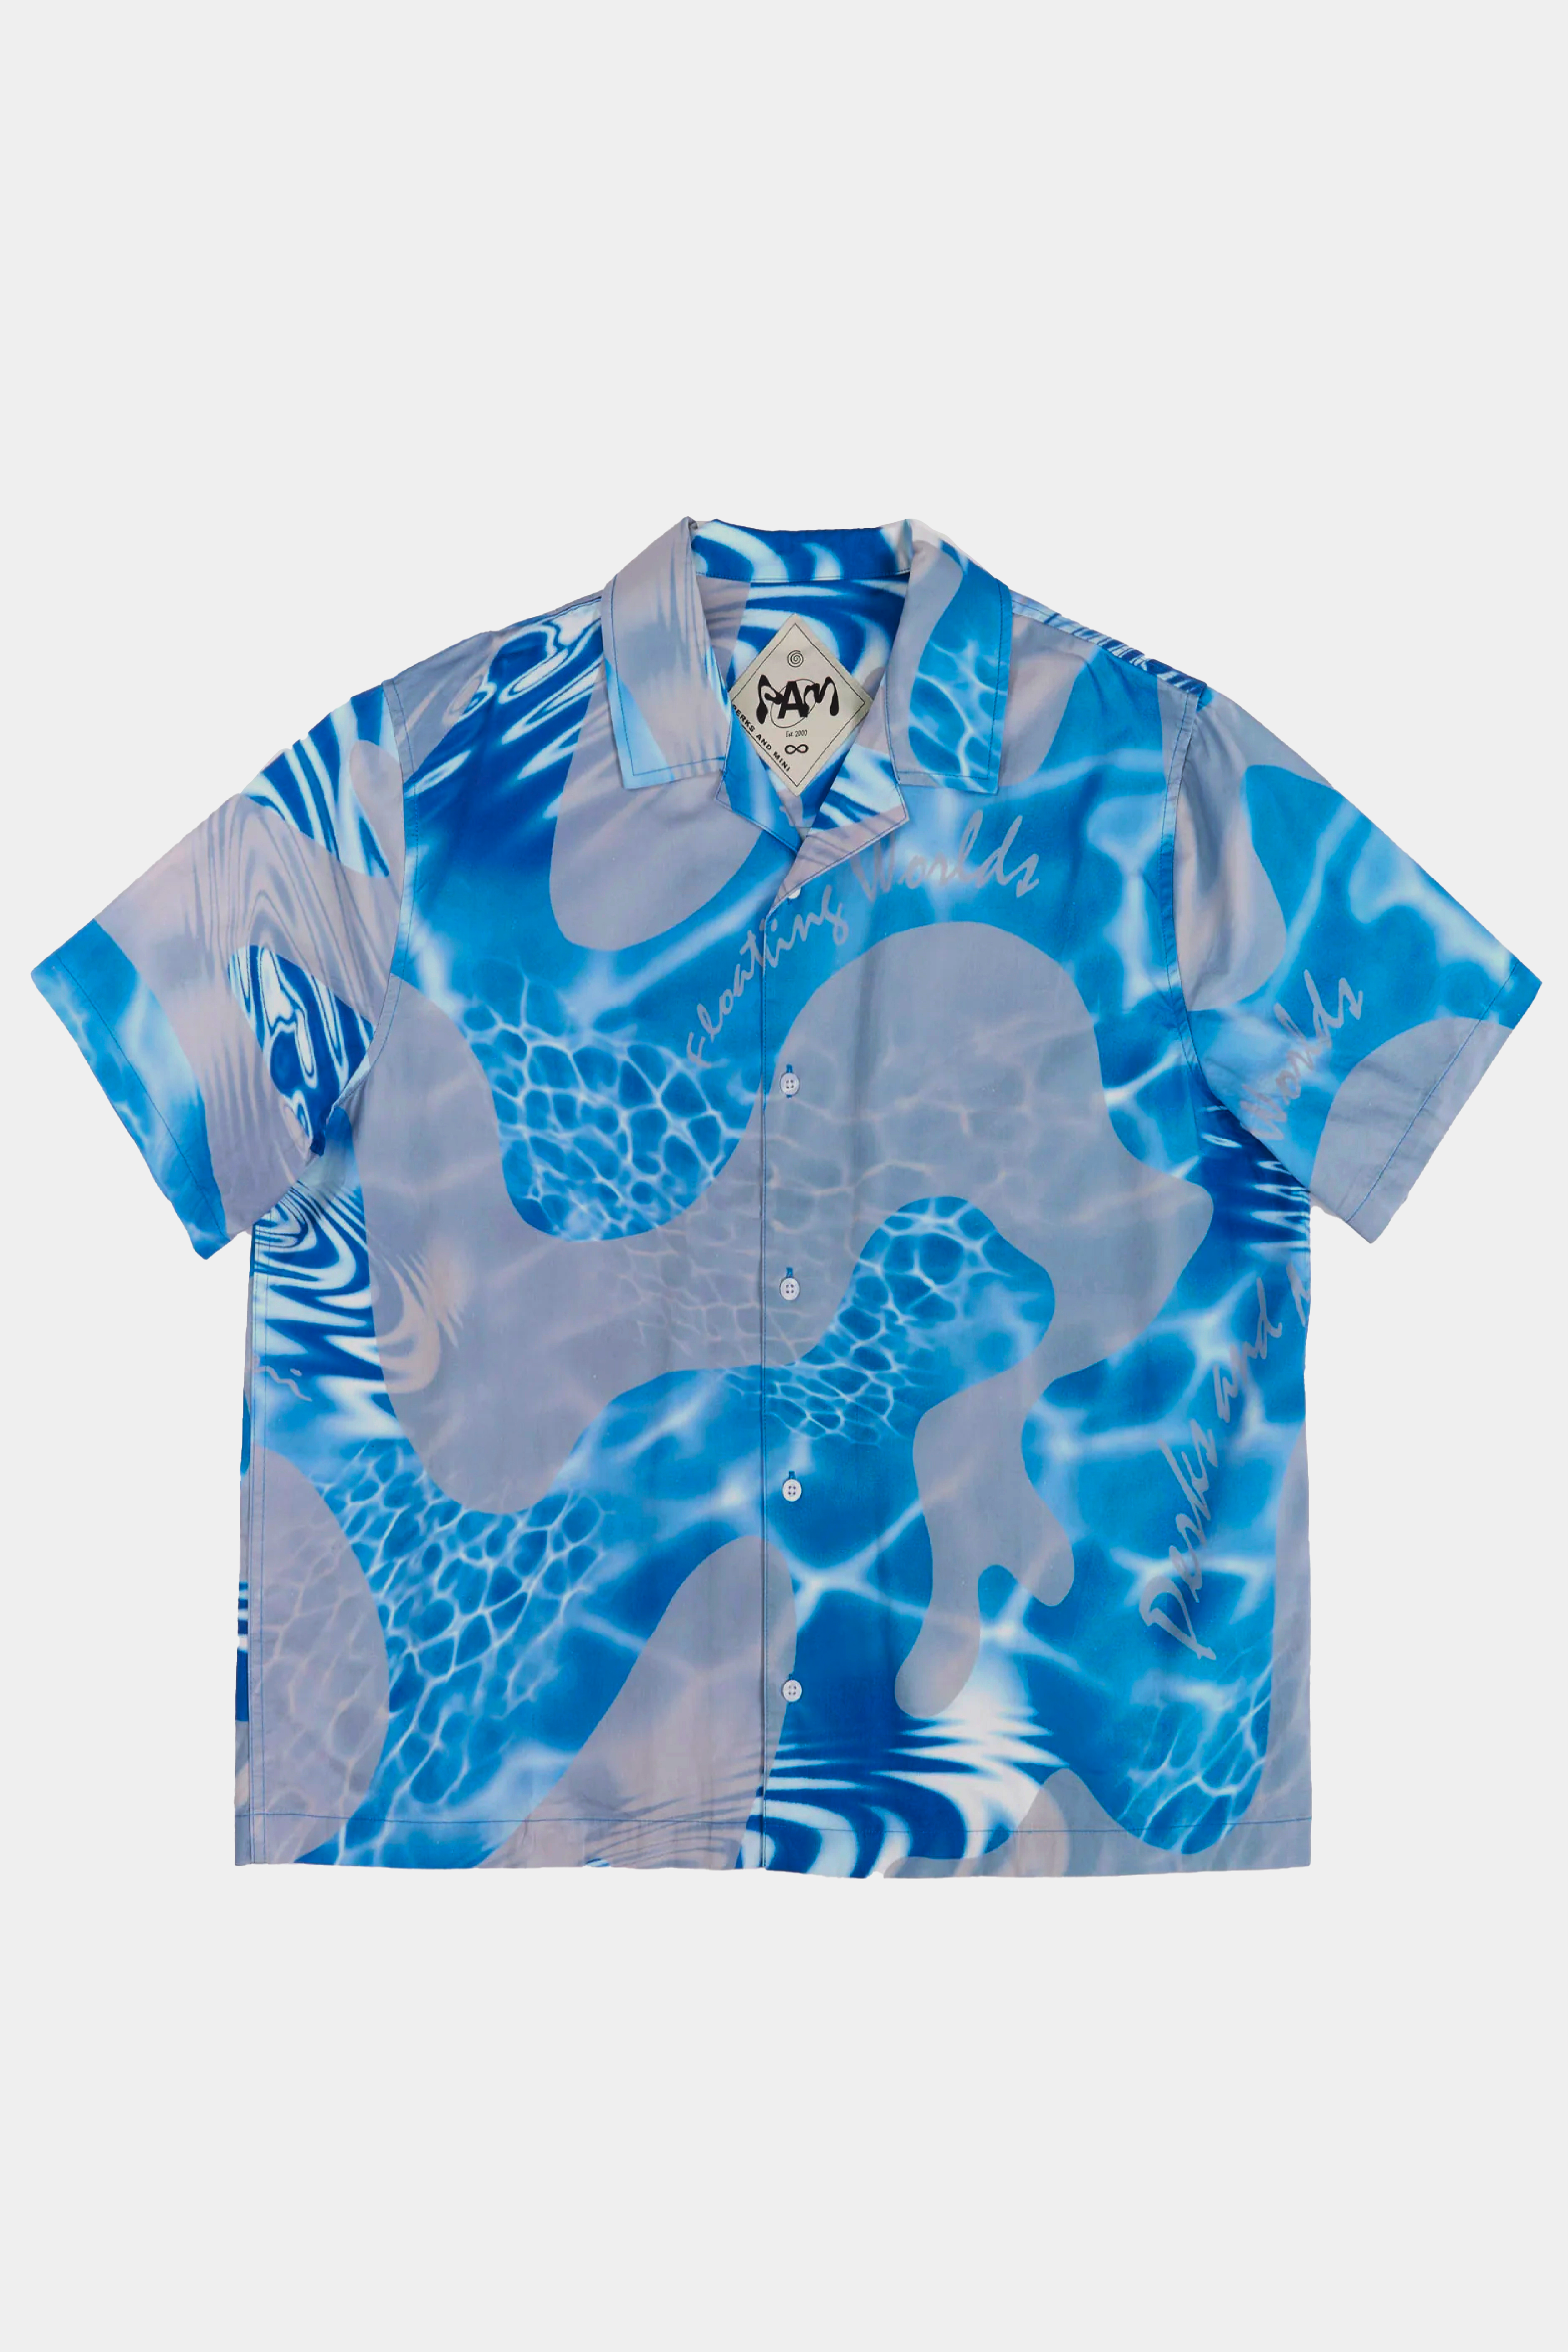 Selectshop FRAME - PERKS AND MINI Floating All Over Print Shirt Shirts Concept Store Dubai